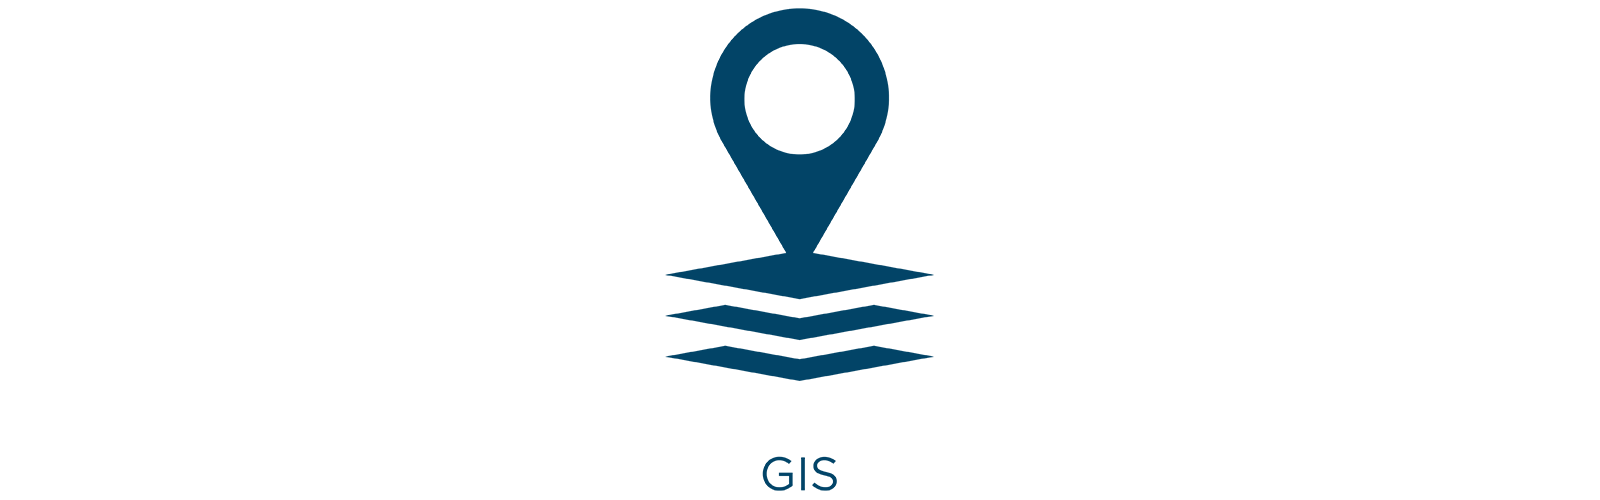 GIS-Graphic-1600x500